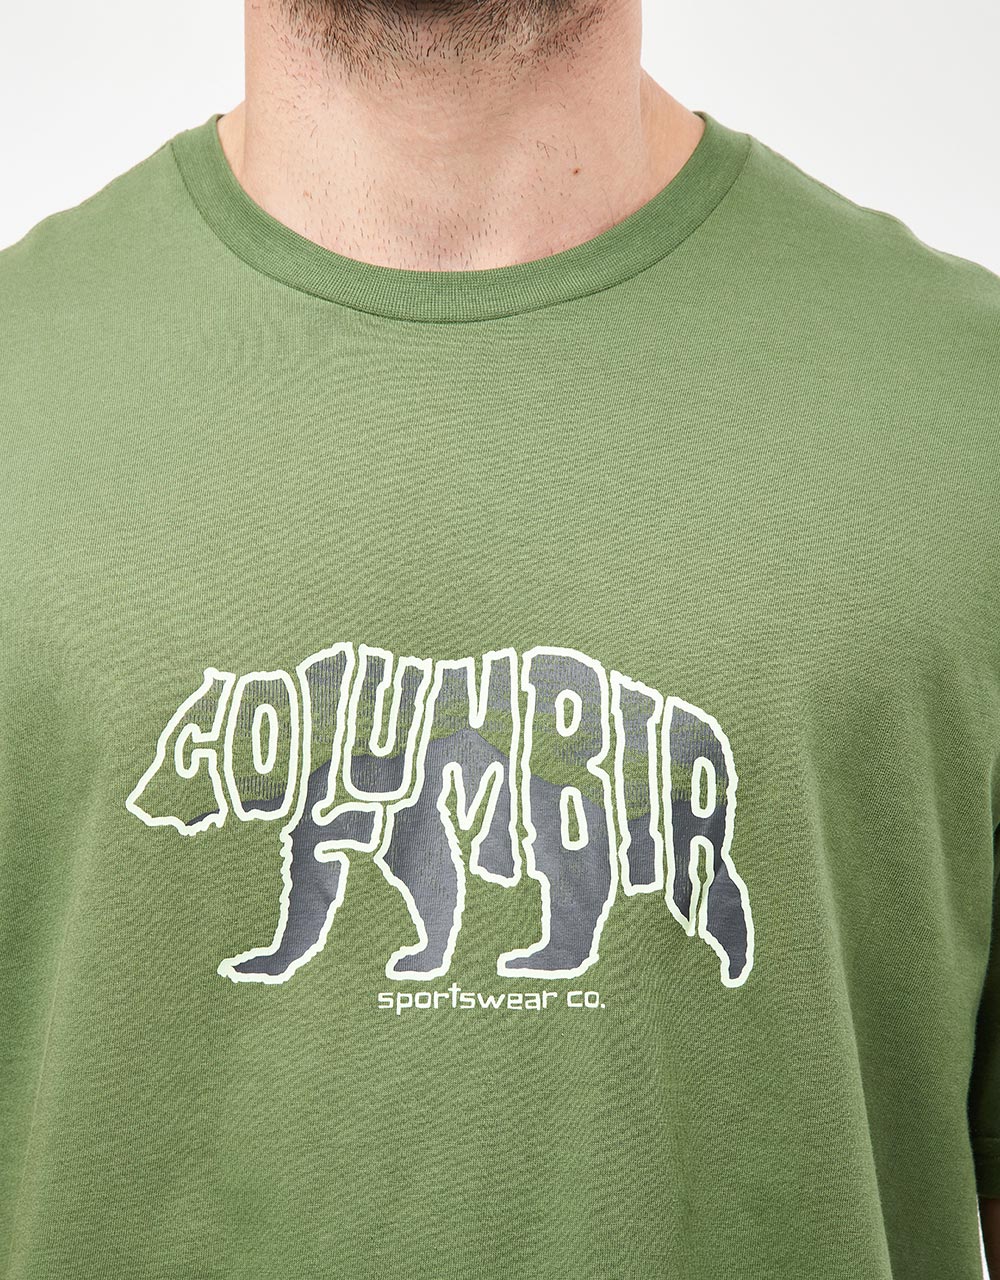 Columbia Rockaway River™ Outdoor T-Shirt - Canteen/Bearly Stroll